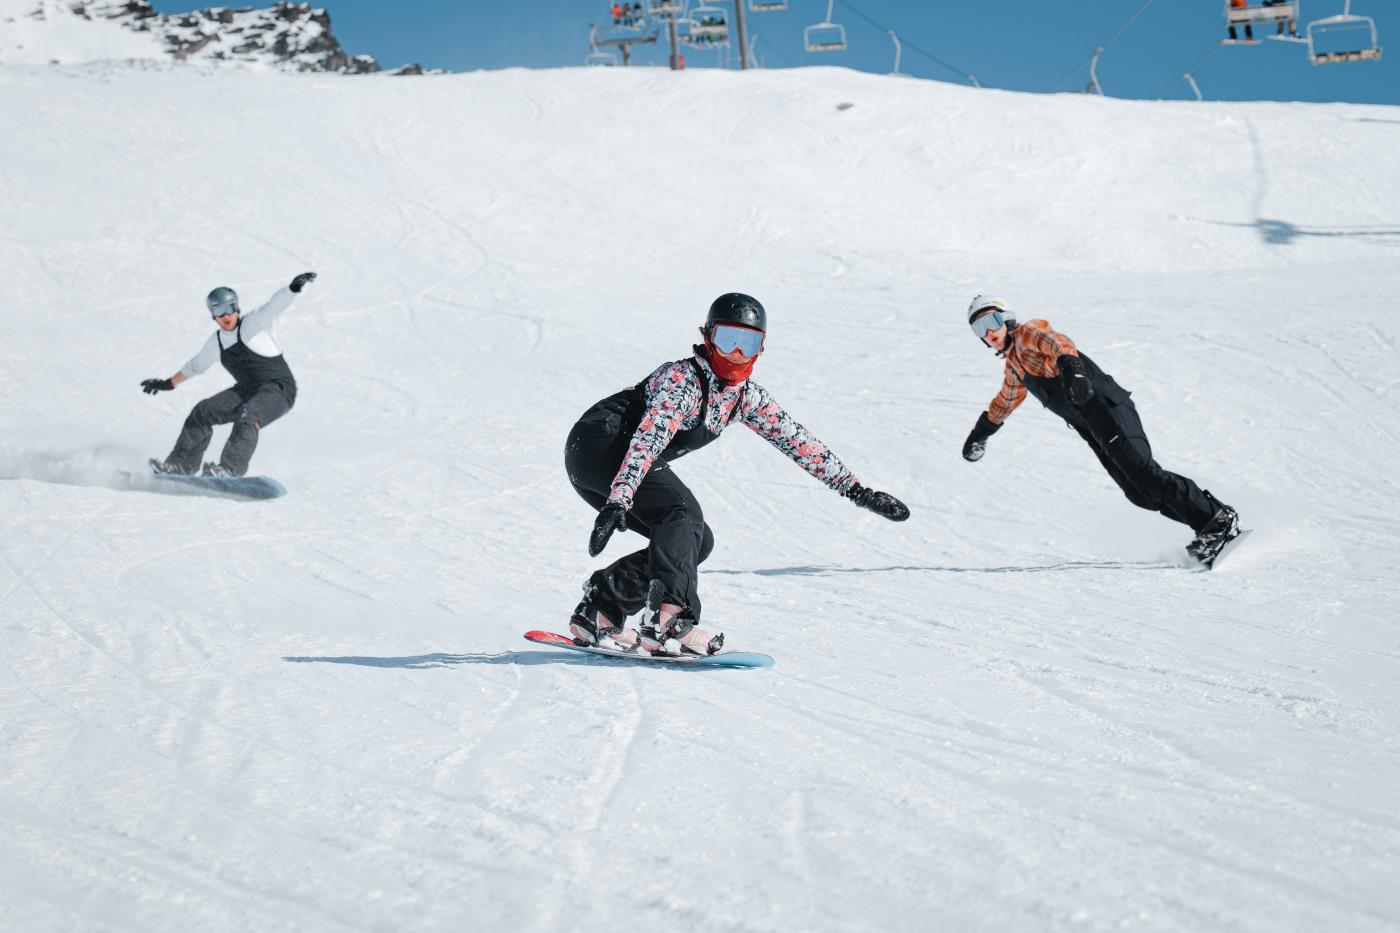 Group of snowboarders shredding Coronet Peak in spring